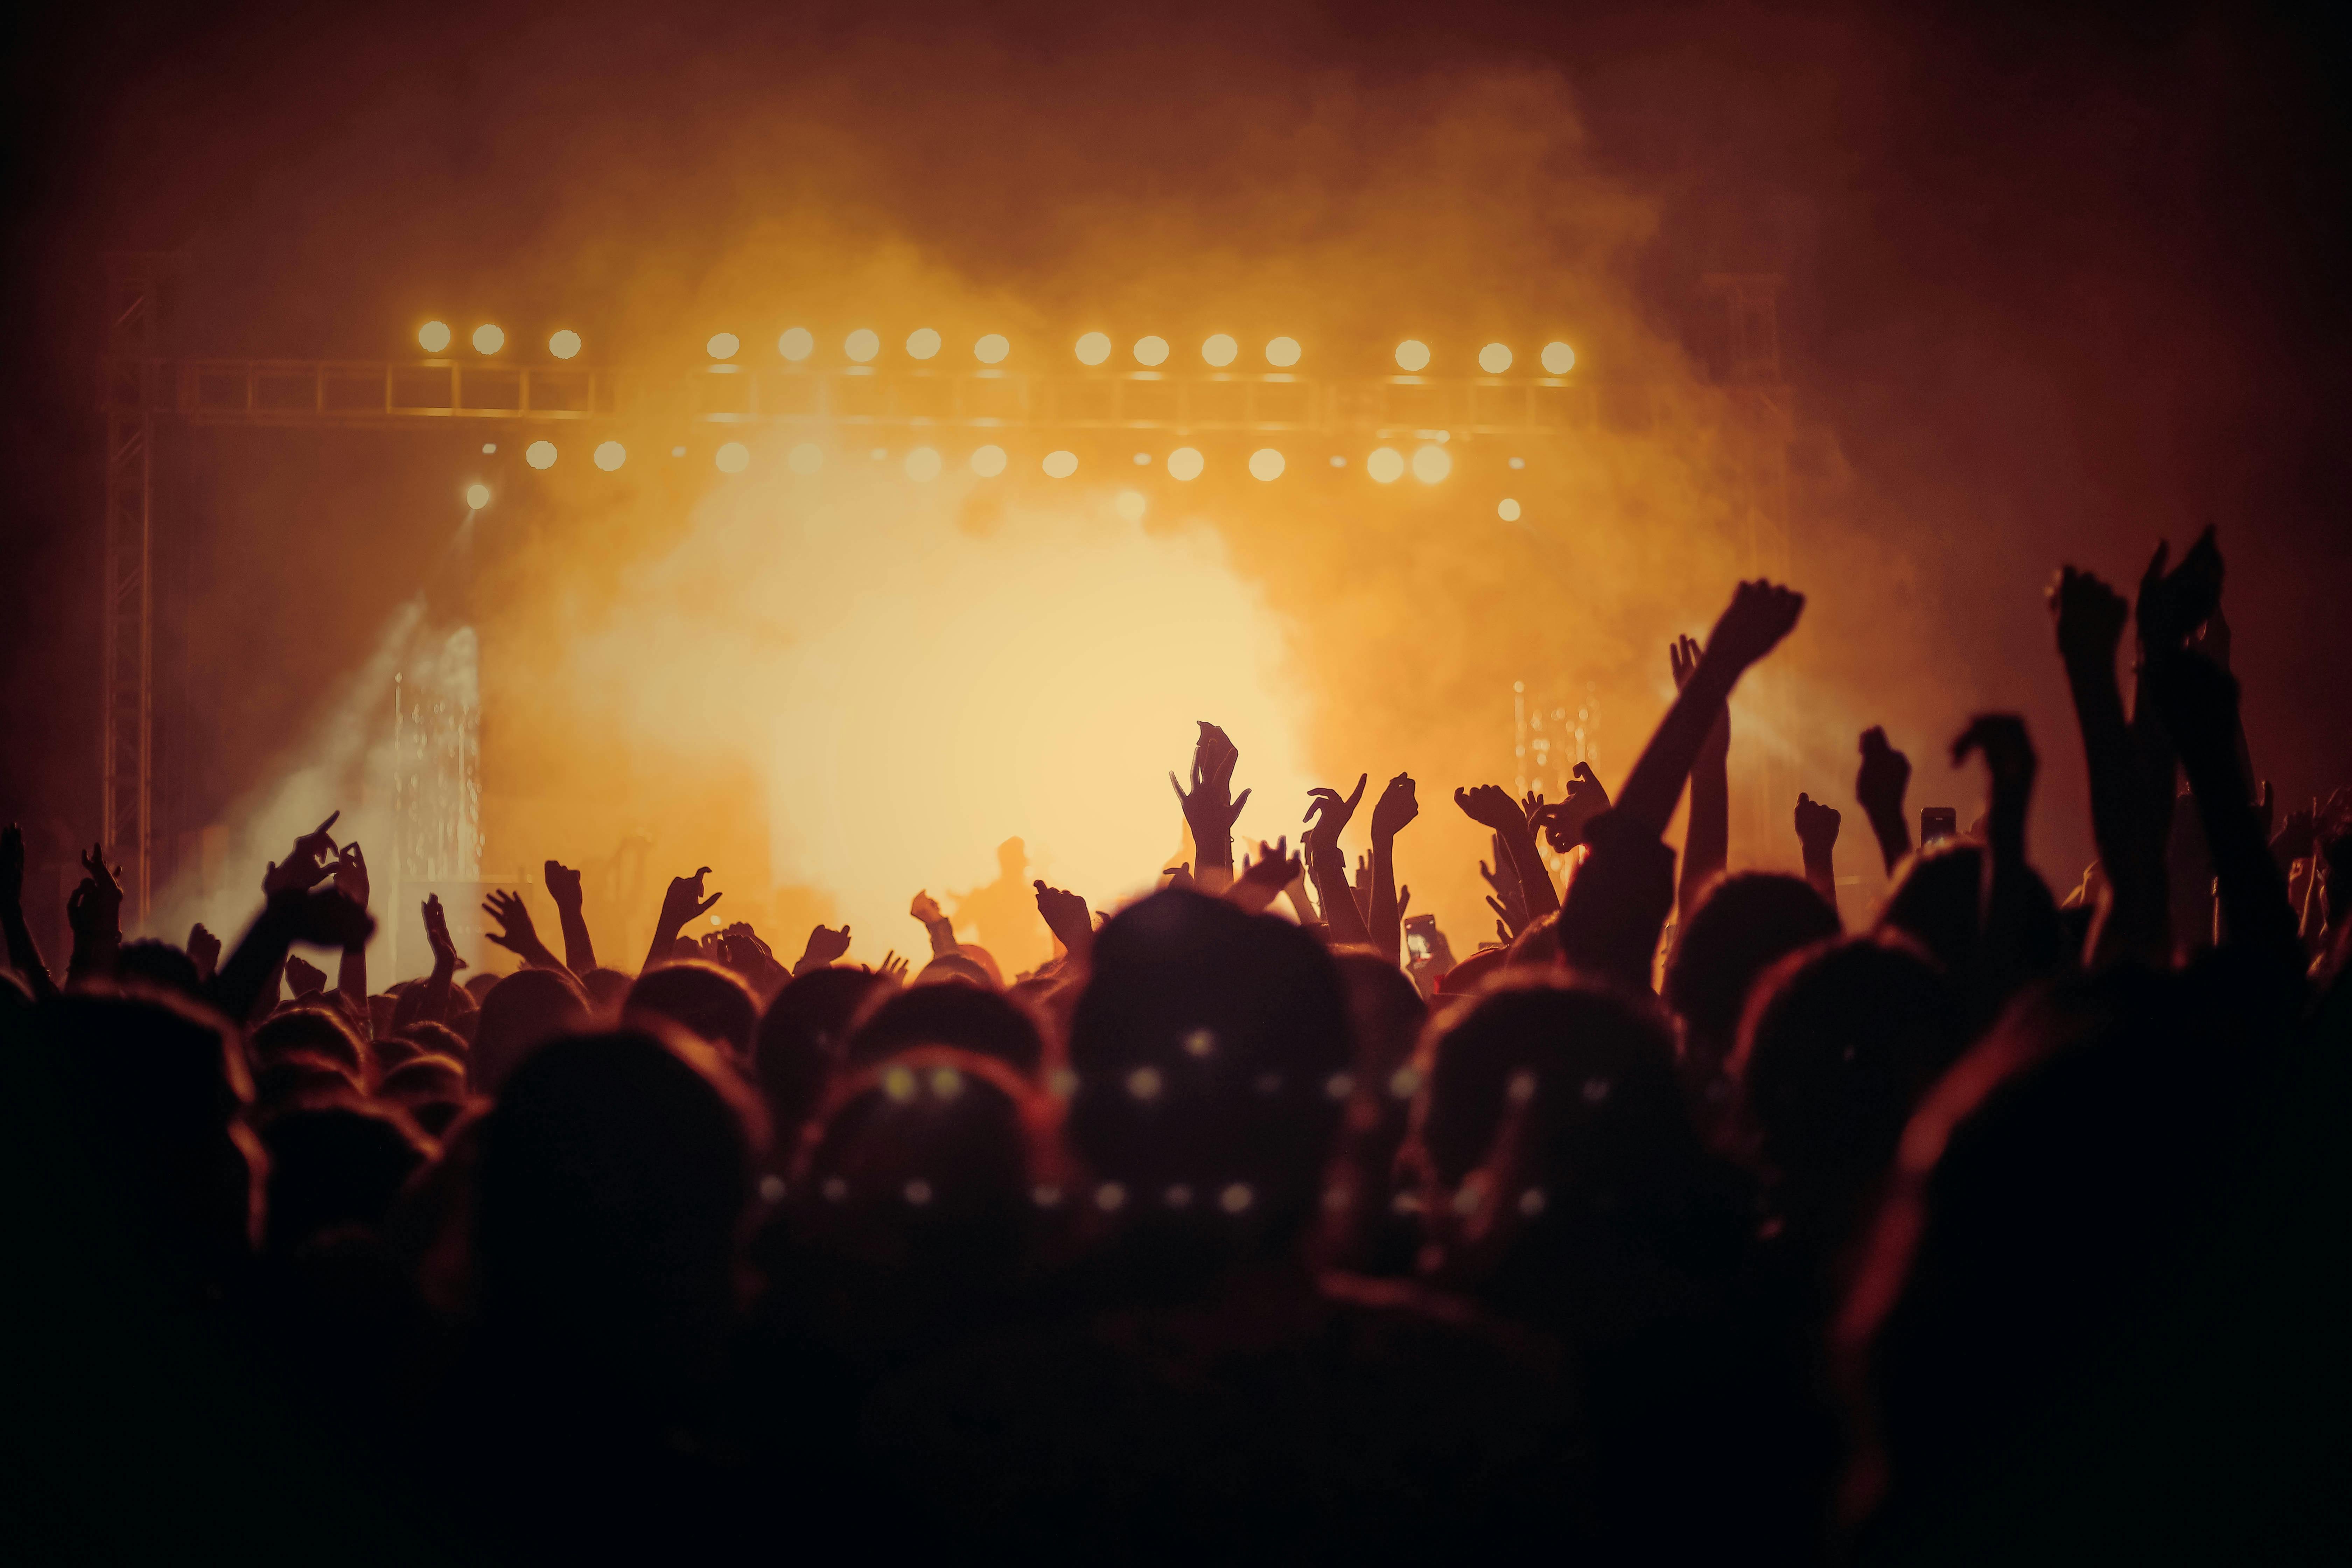 Fans at a concert | Source: Pexels